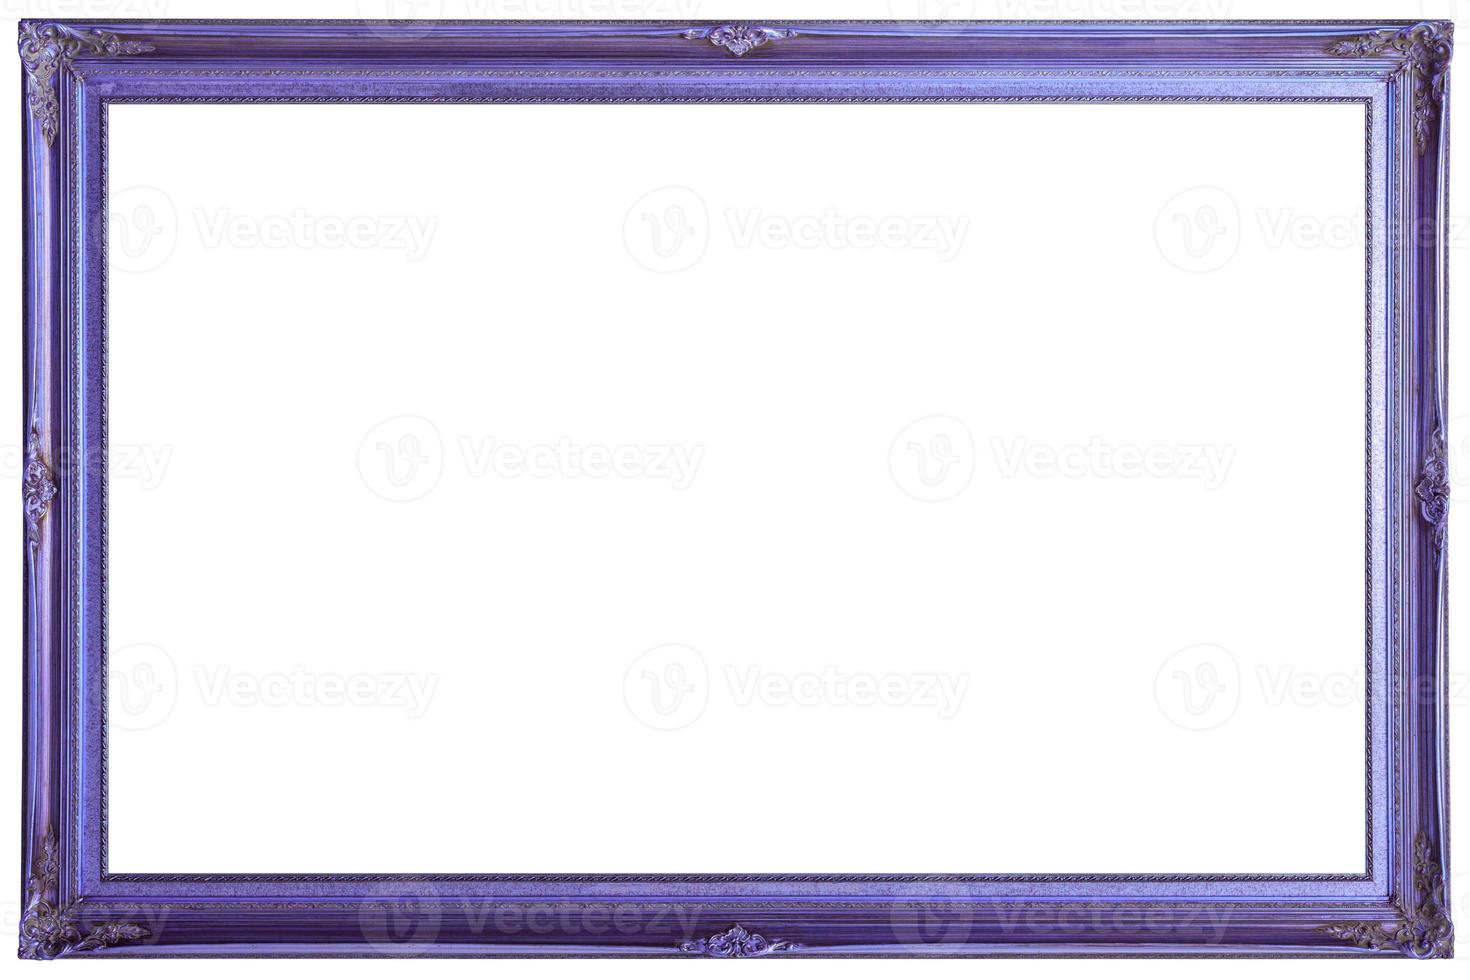 vintage purple wooden painting frame mockup isolated on white background photo